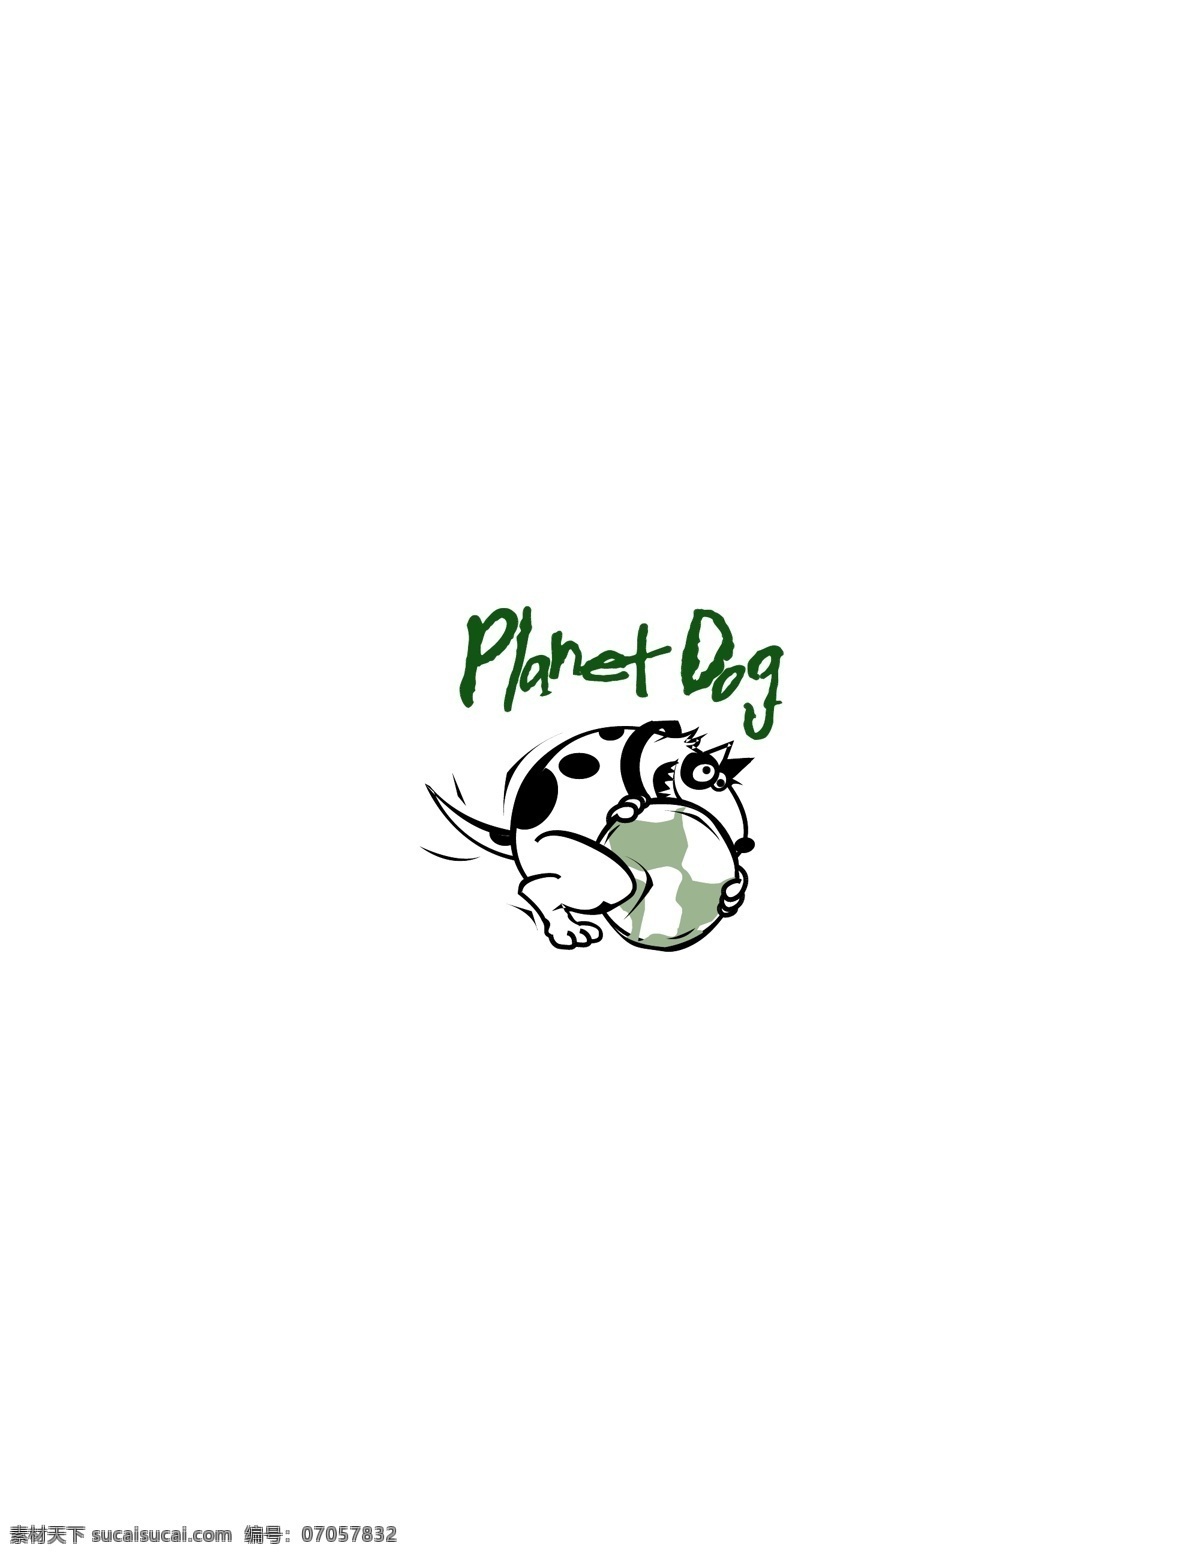 planet logo大全 logo 设计欣赏 商业矢量 矢量下载 dog 标志设计 欣赏 网页矢量 矢量图 其他矢量图